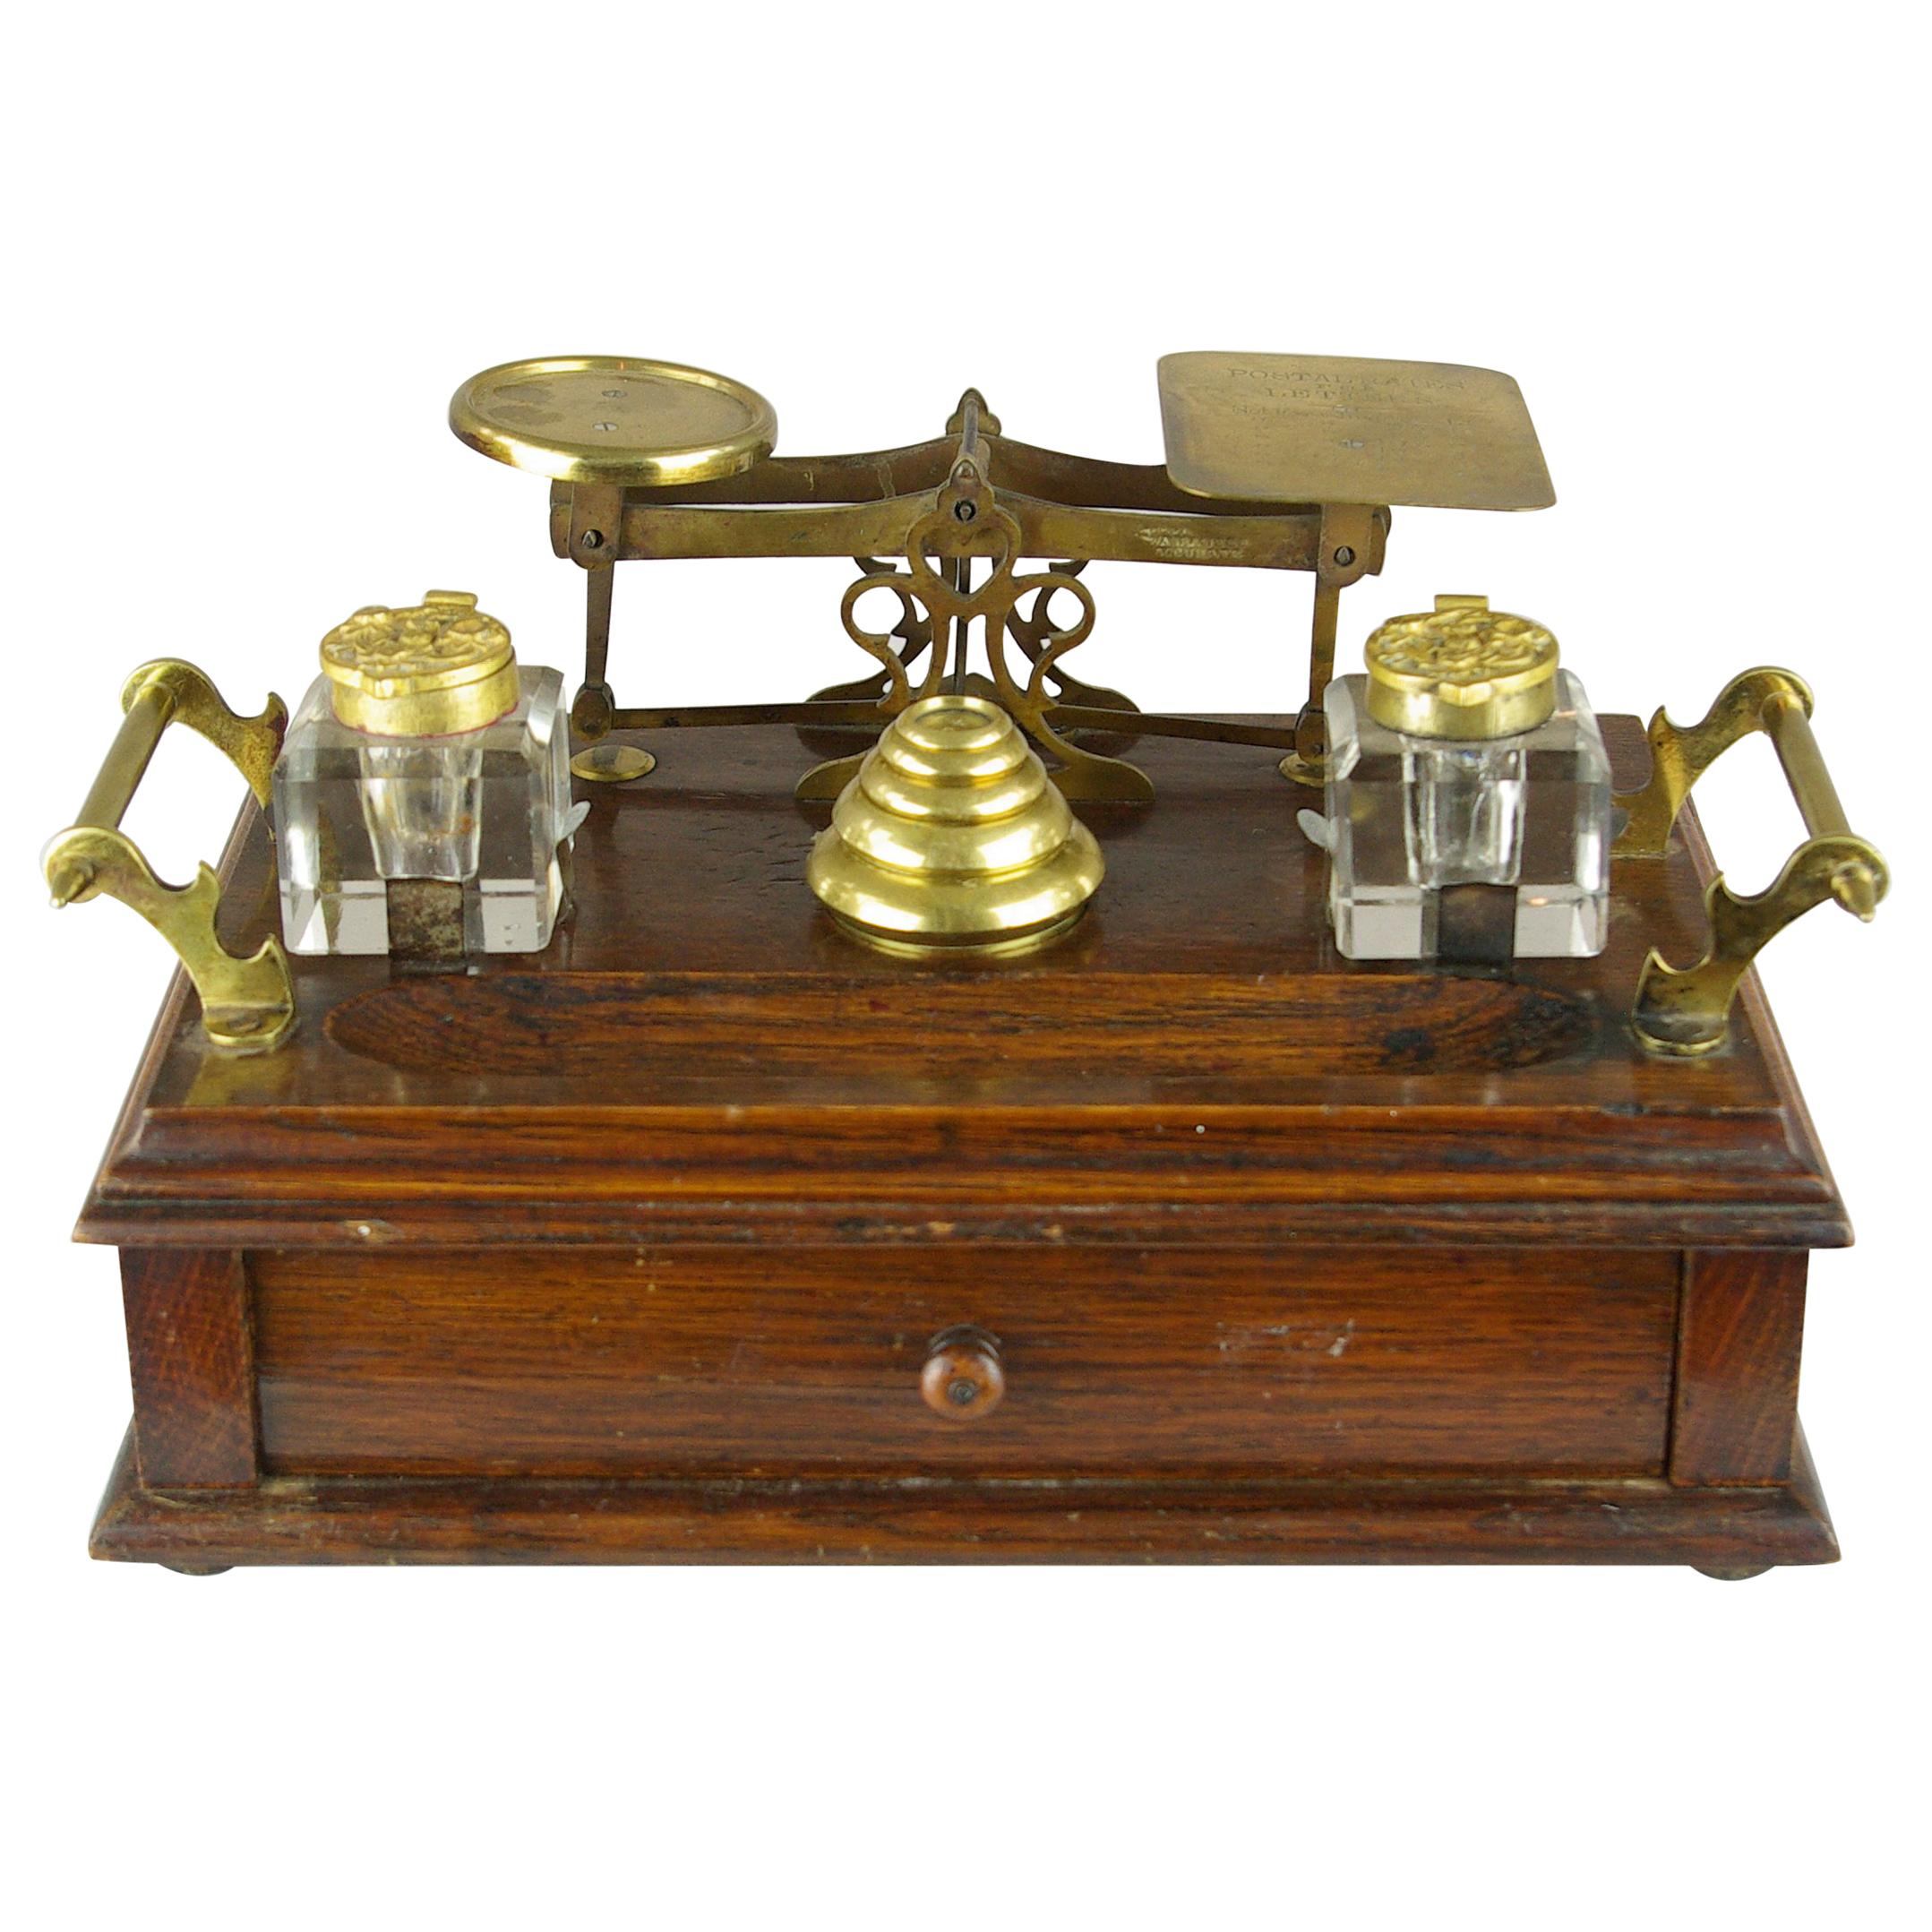 Antique Desk Set, Scottish Victorian Inkstand, Postal Scale, and Weights, B1430C